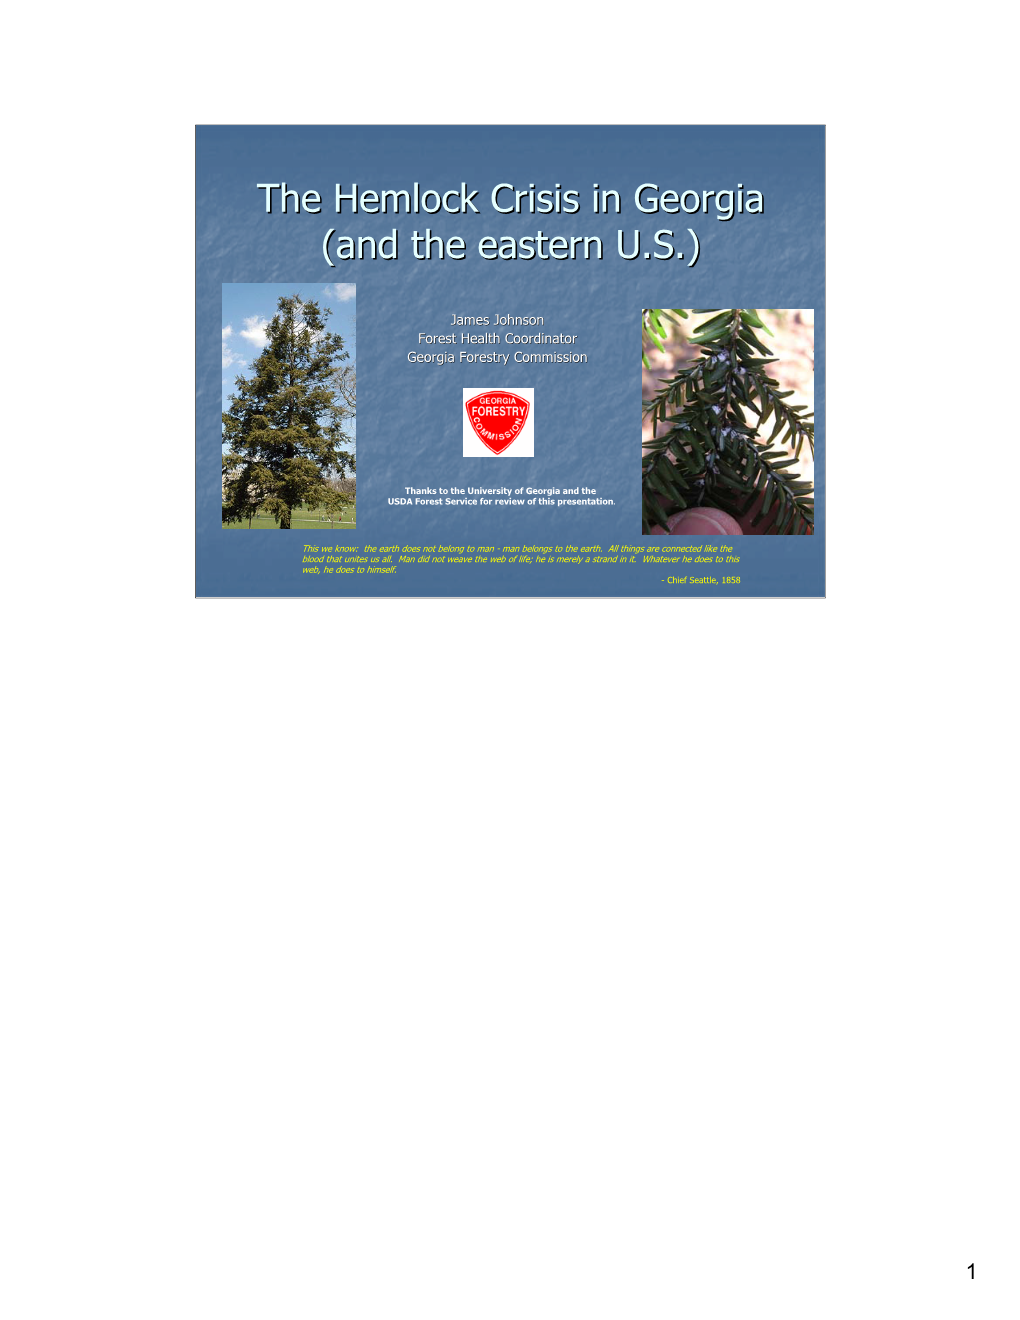 The Hemlock Crisis in Georgia (And the Eastern U.S.)